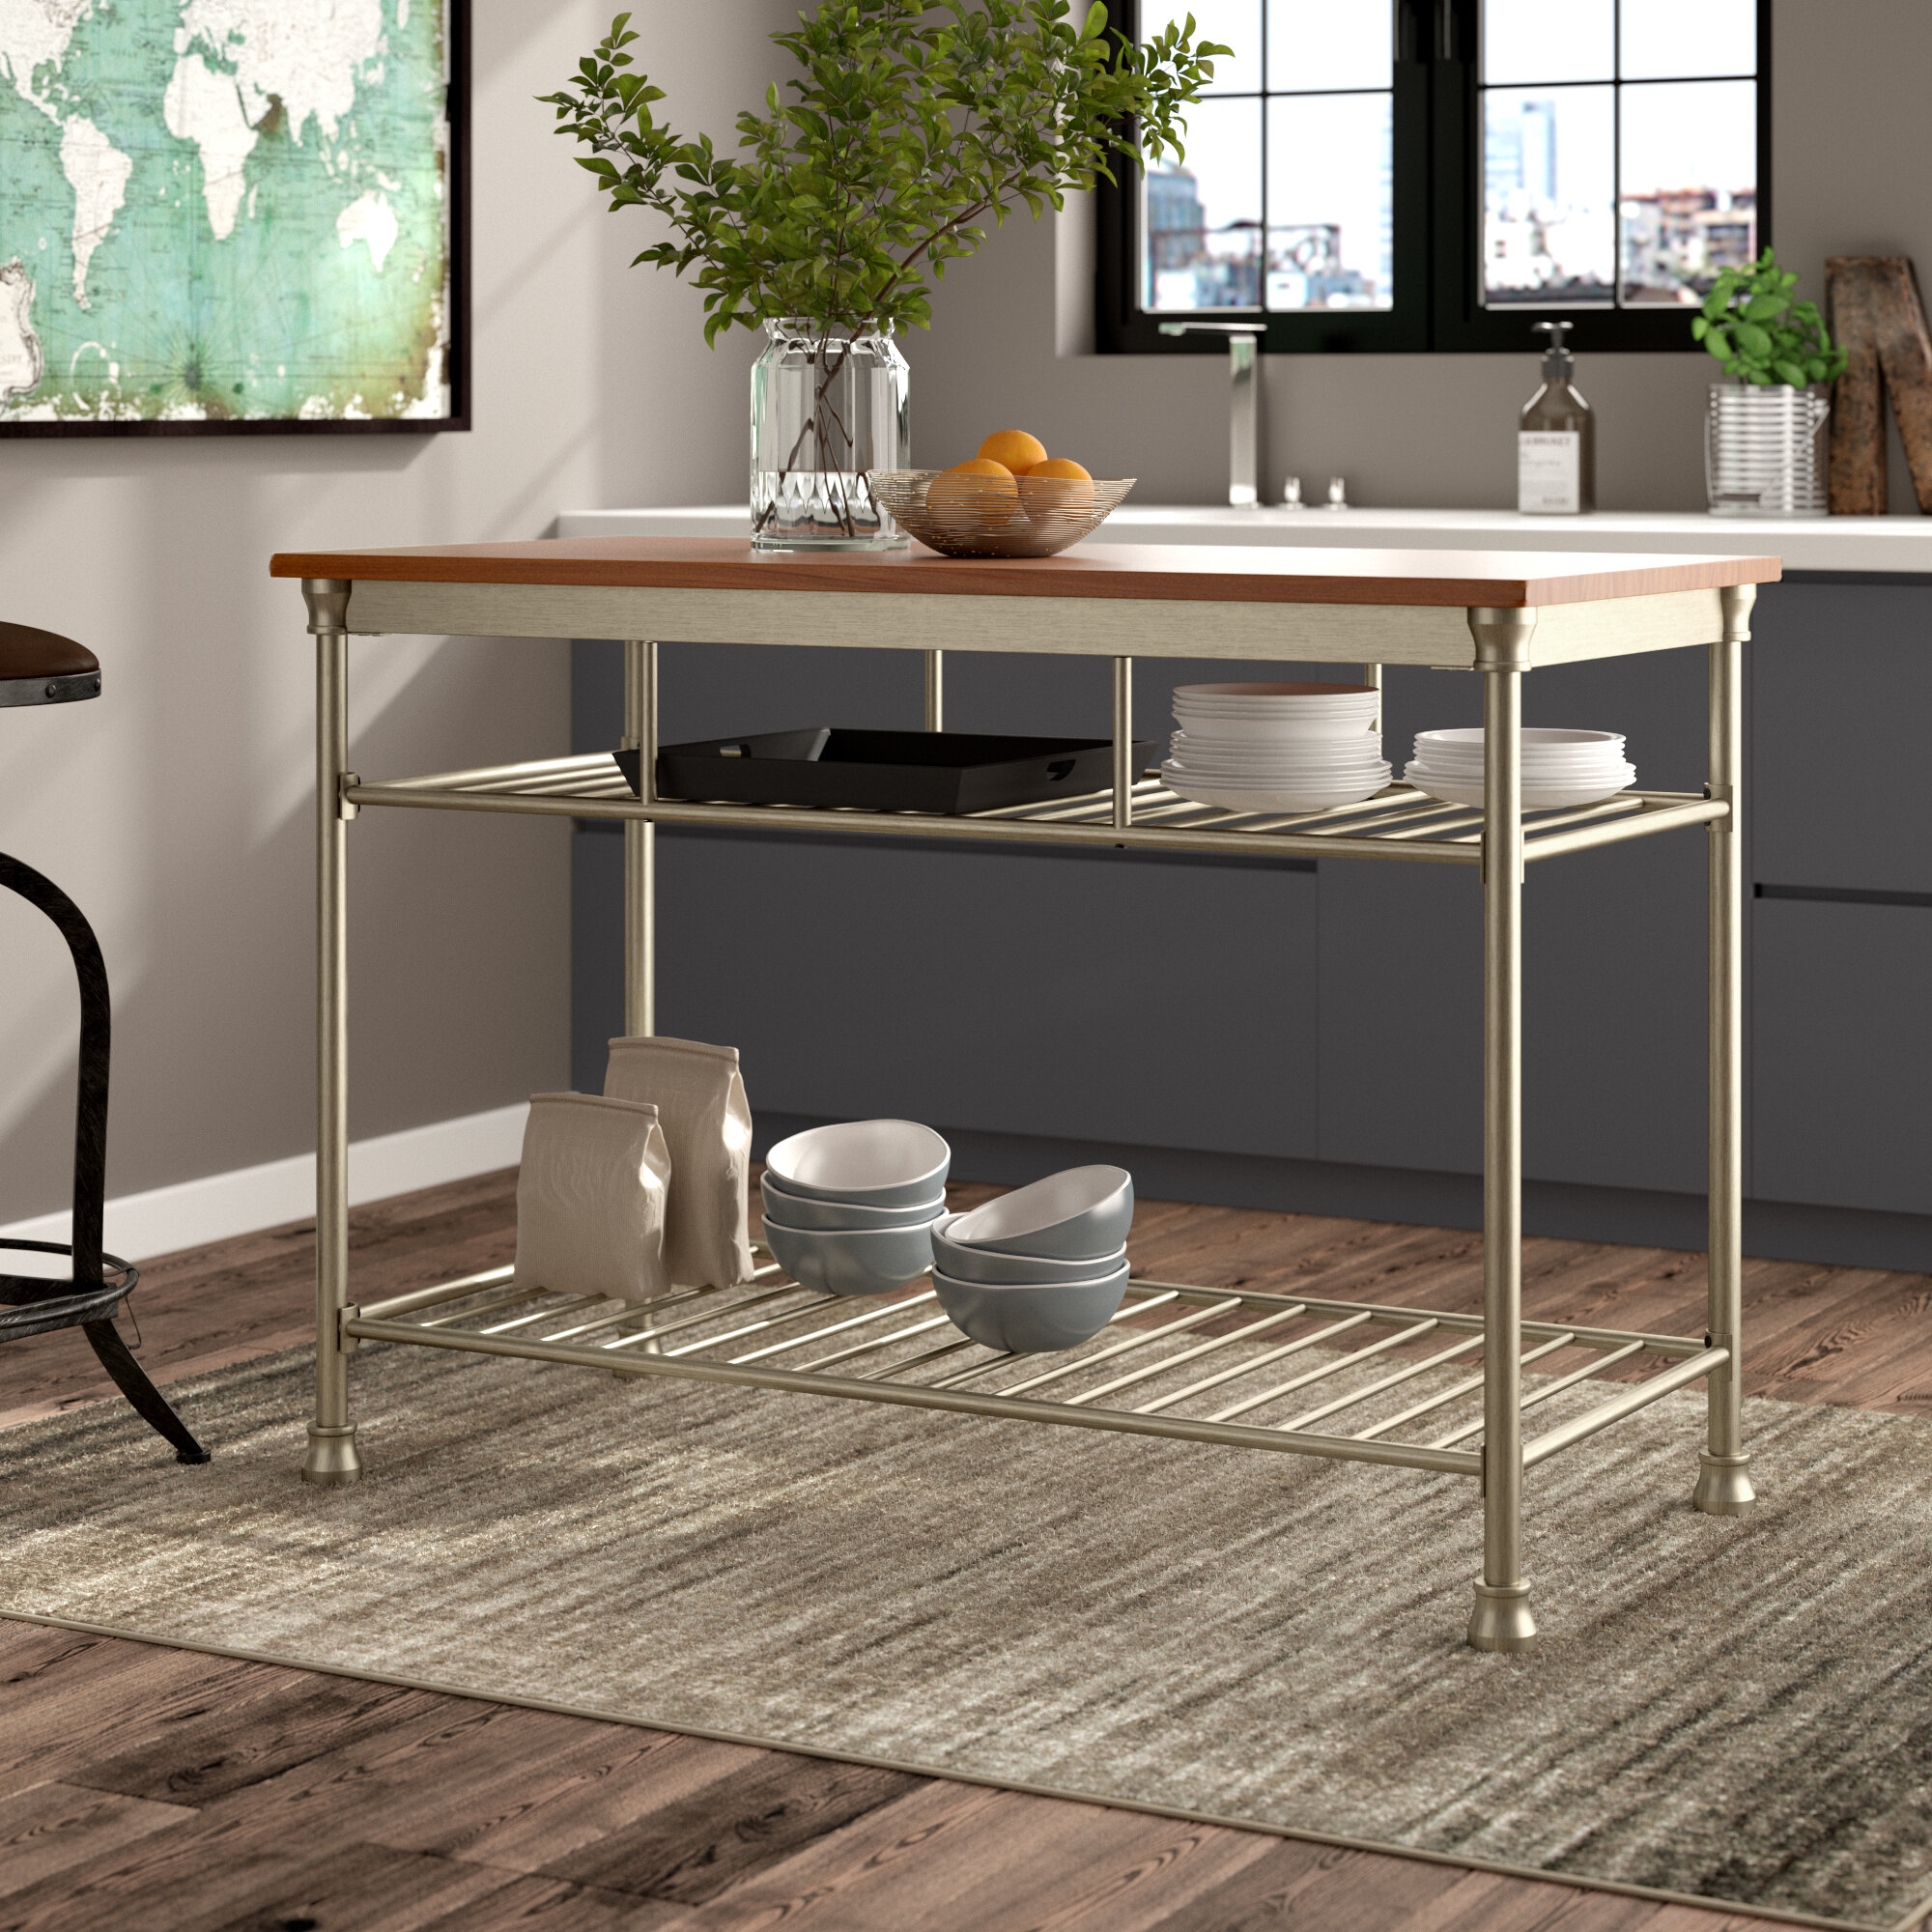 Trent Austin Design Haleakal Kitchen Island Prep Table With Manufactured Wood Reviews Wayfair